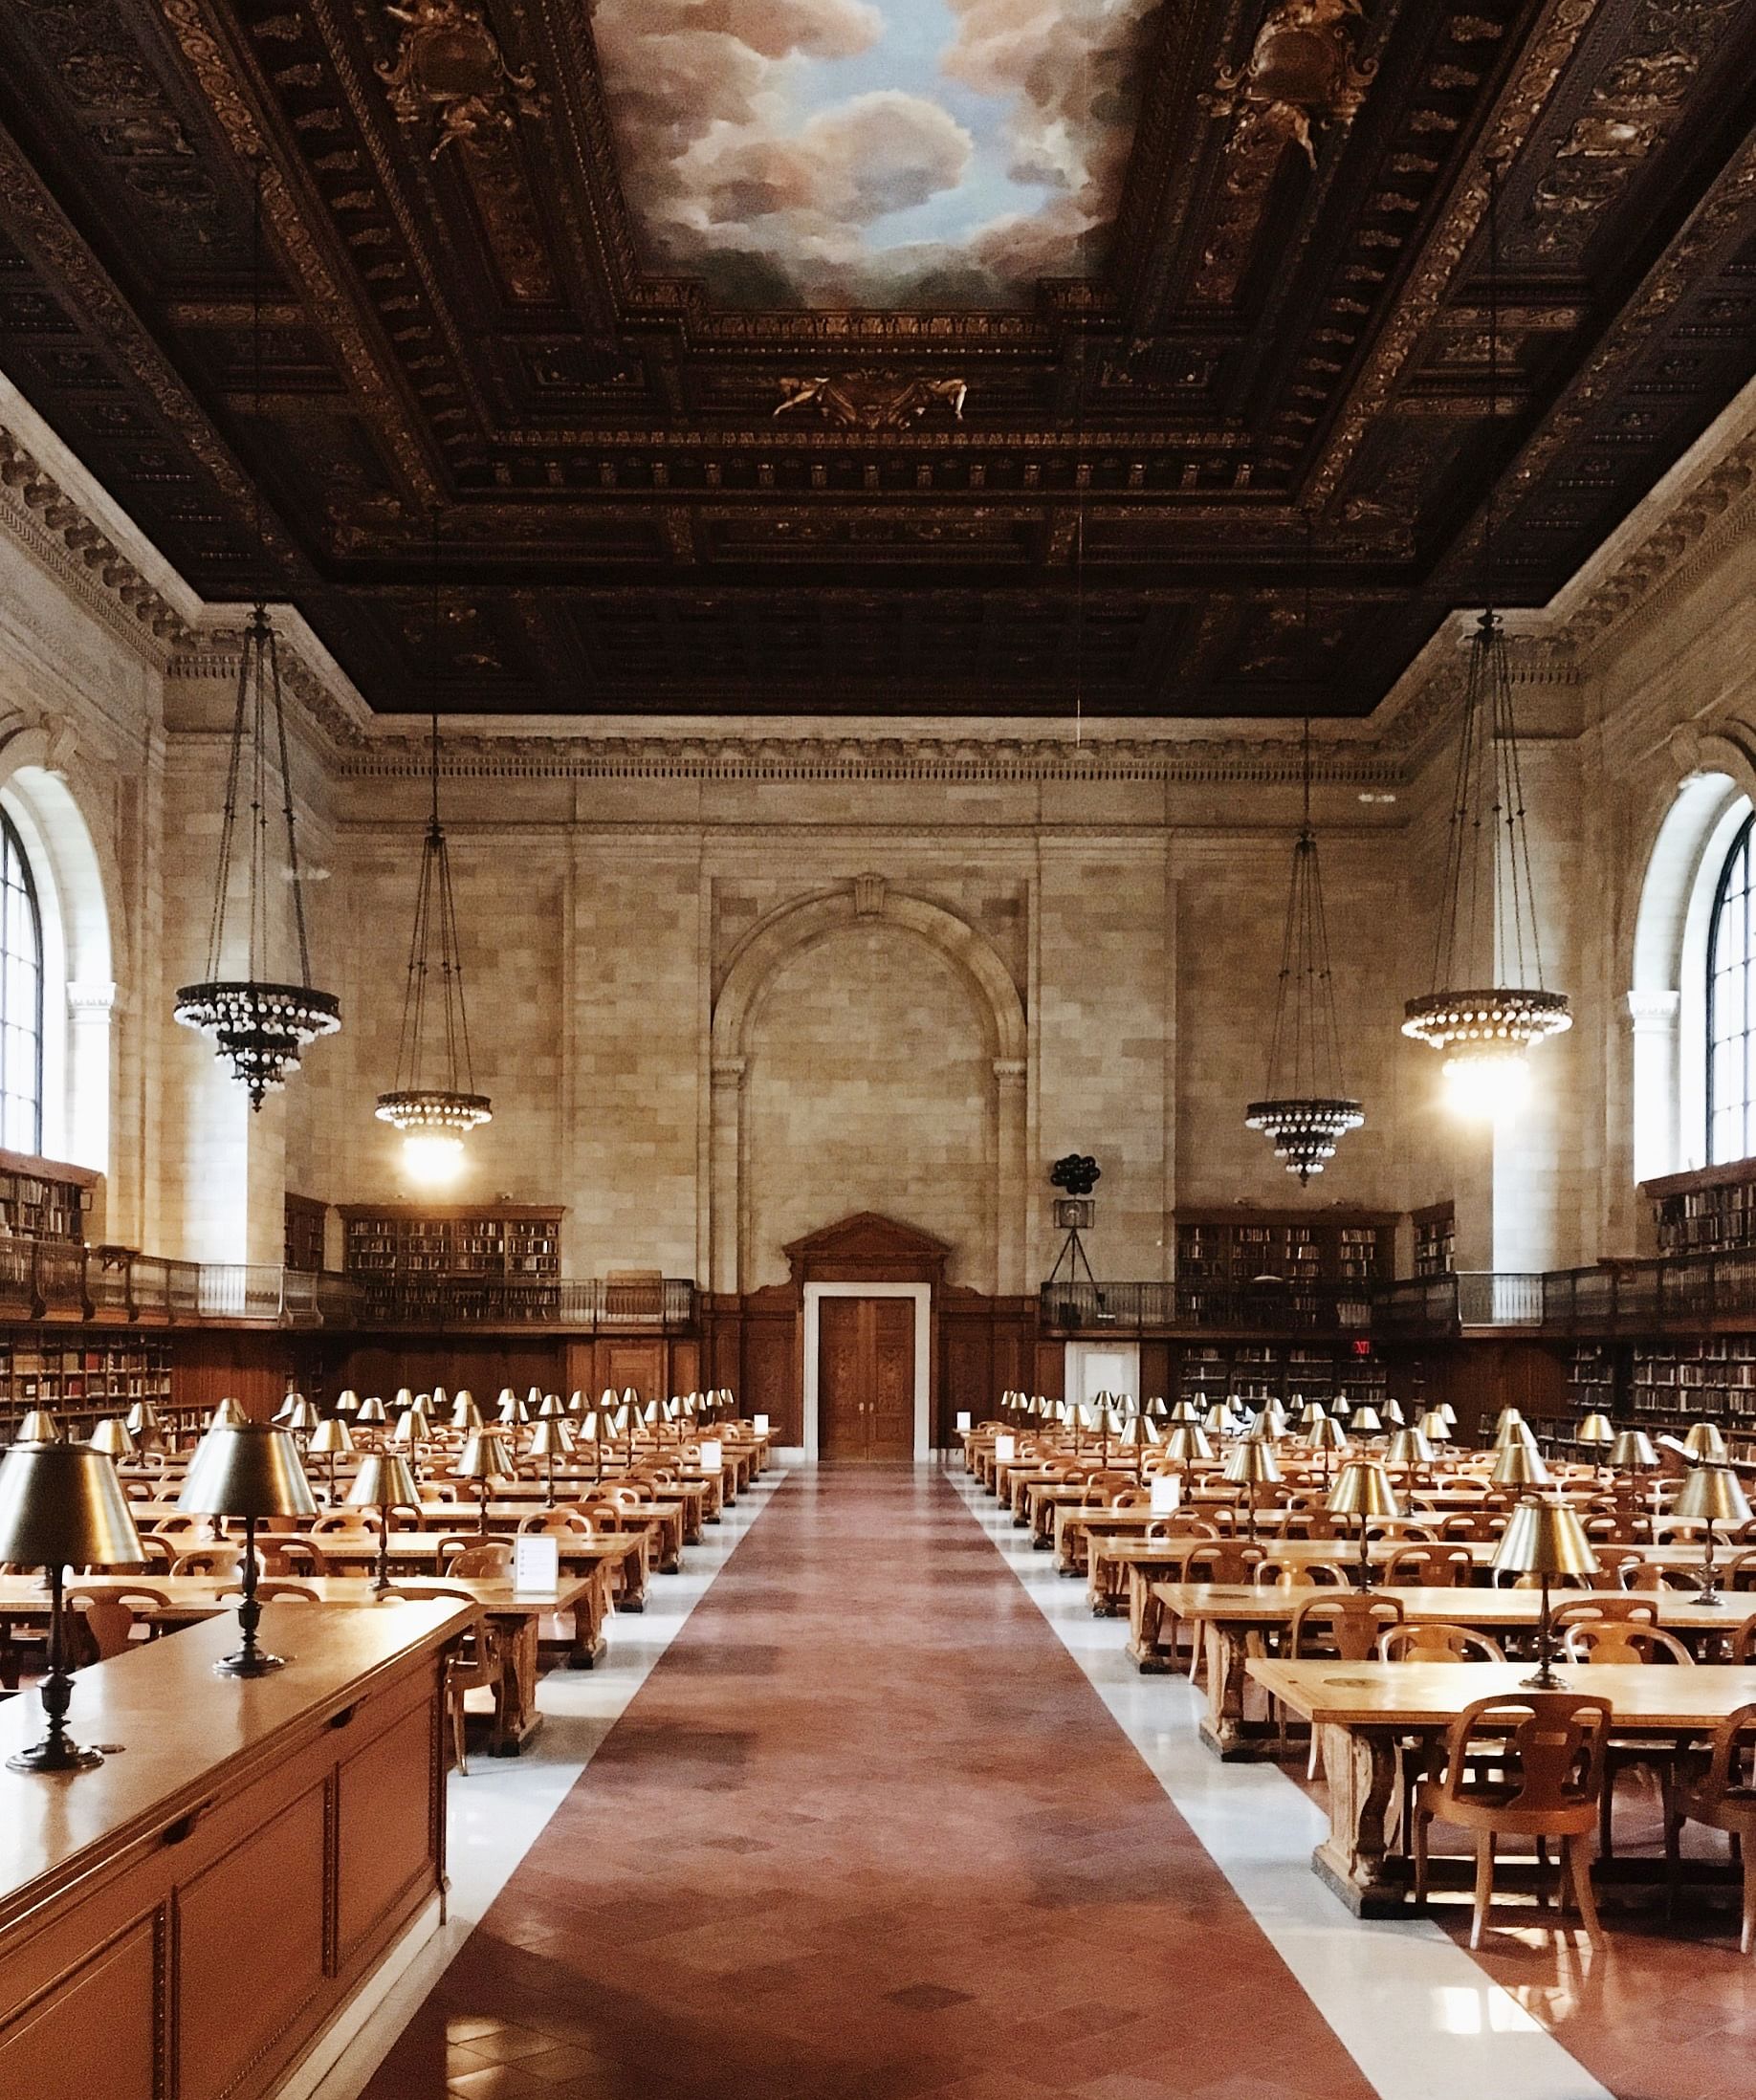 New York Public Library in New York, New York